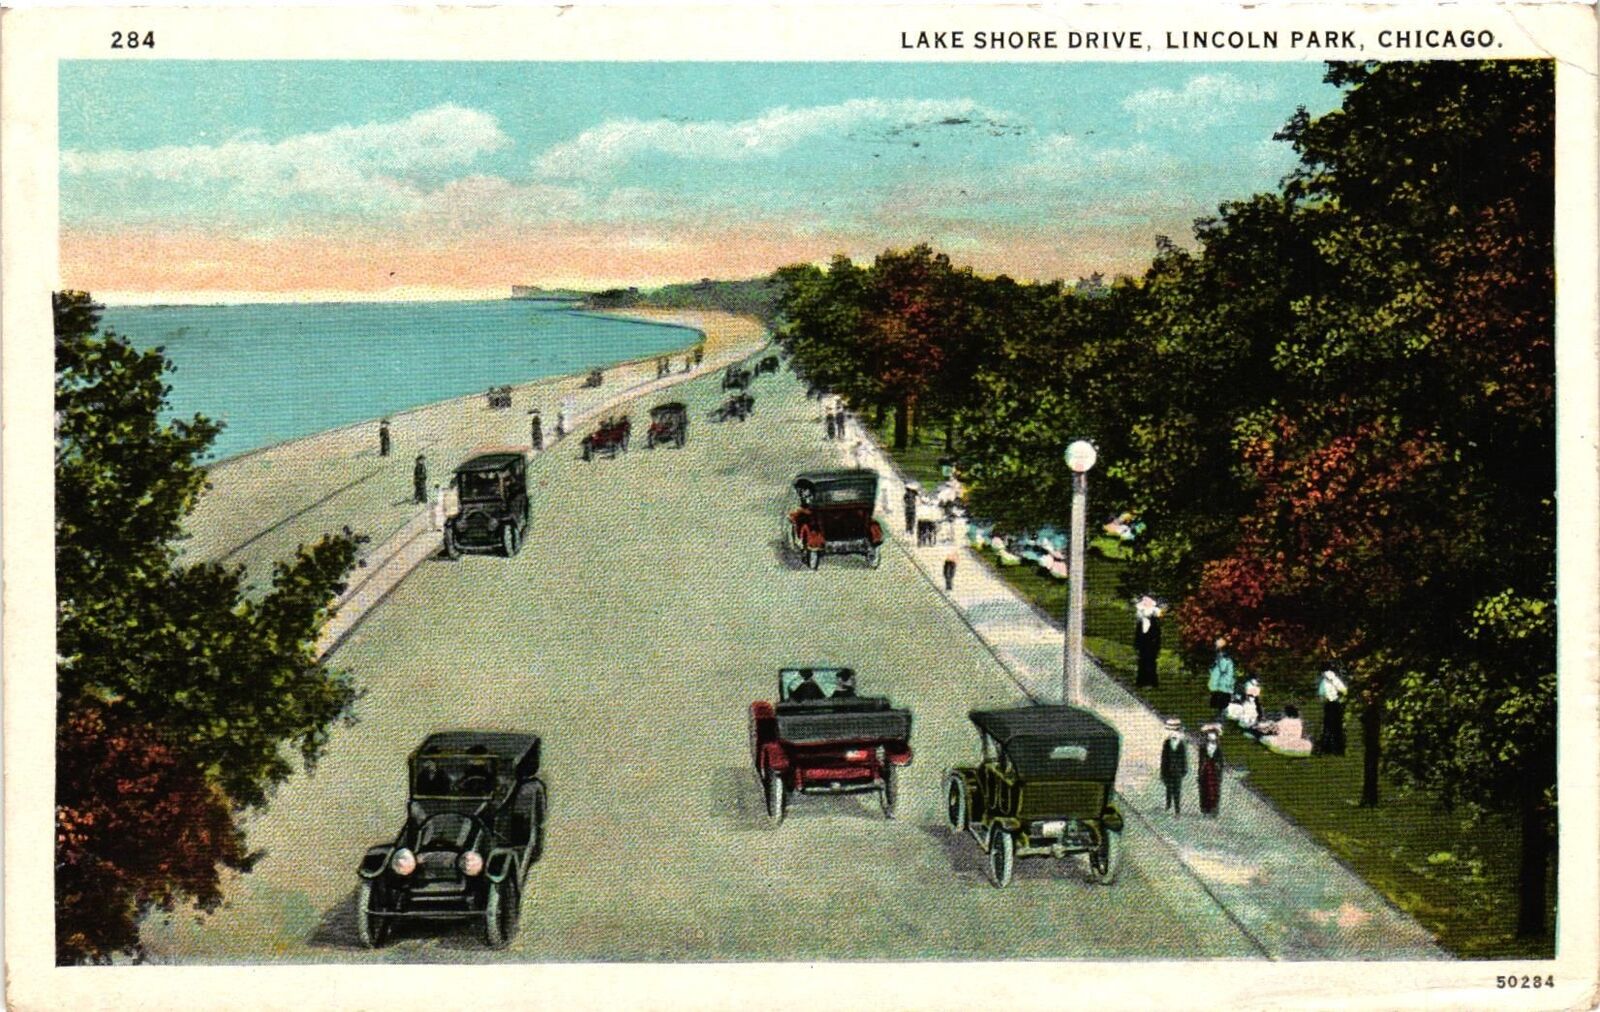 VTG Postcard- 50284. LAKE SHORT DRIVE, LINCOLN PARK, CHICAGO IL. Posted 1935